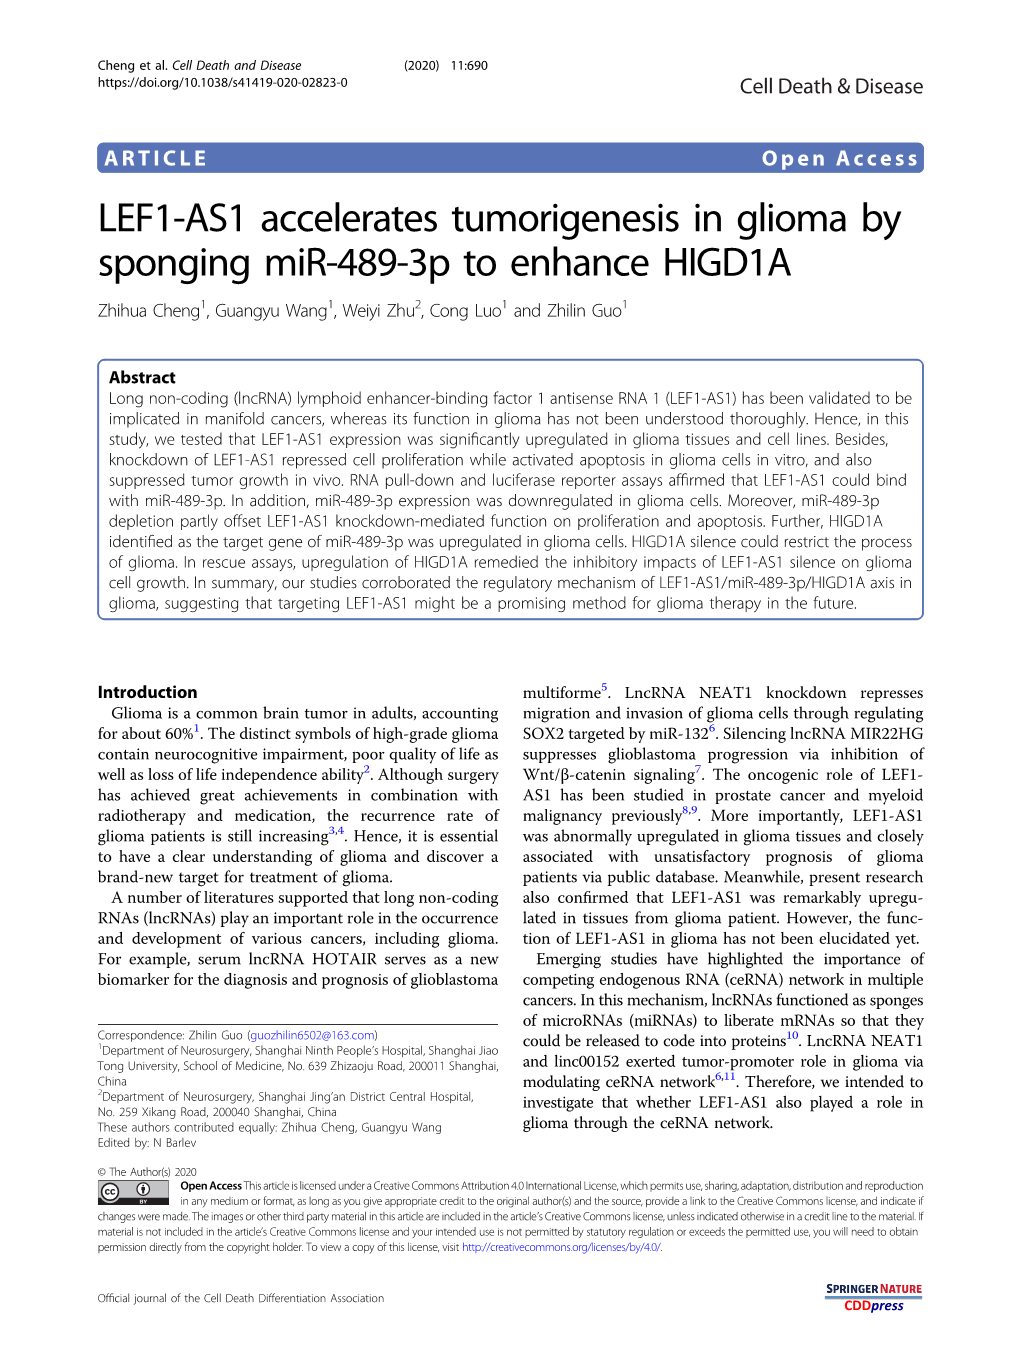 LEF1-AS1 Accelerates Tumorigenesis in Glioma by Sponging Mir-489-3P to Enhance HIGD1A Zhihua Cheng1, Guangyu Wang1,Weiyizhu2, Cong Luo1 and Zhilin Guo1